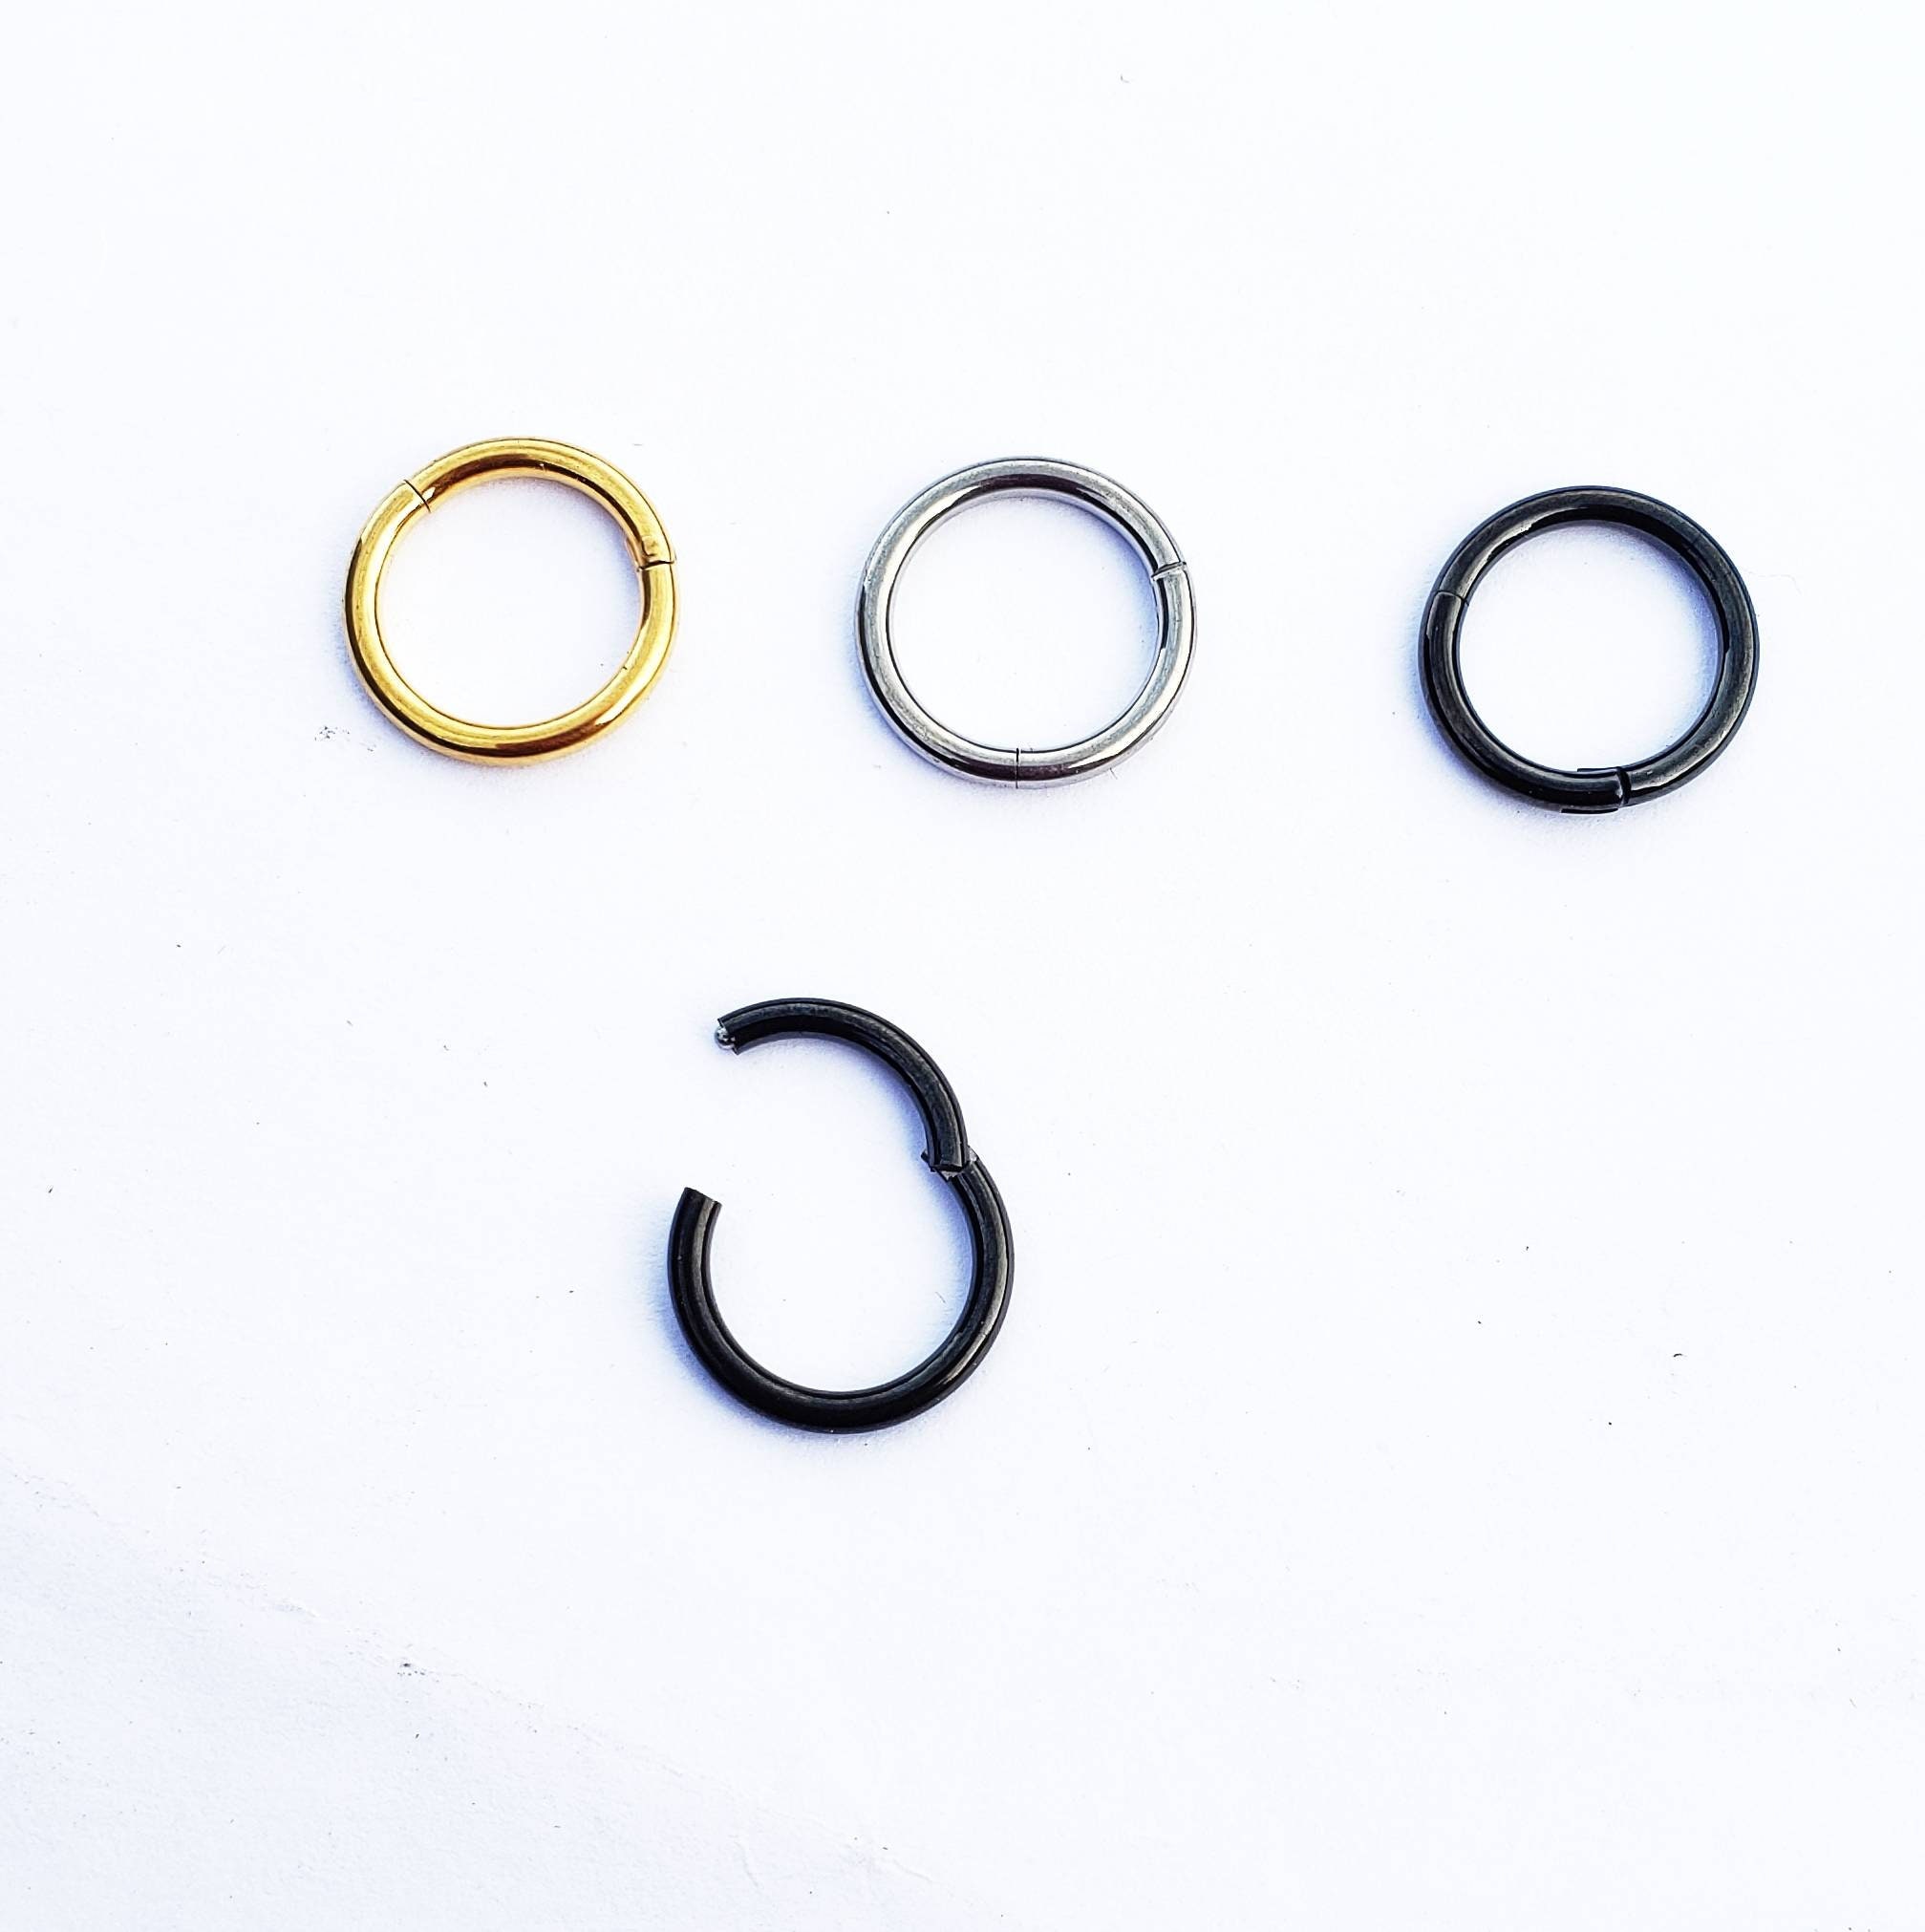 Double Layers Stainless Steel Nose Rings 20G Nostril Piercing Hoop Earrings  | eBay